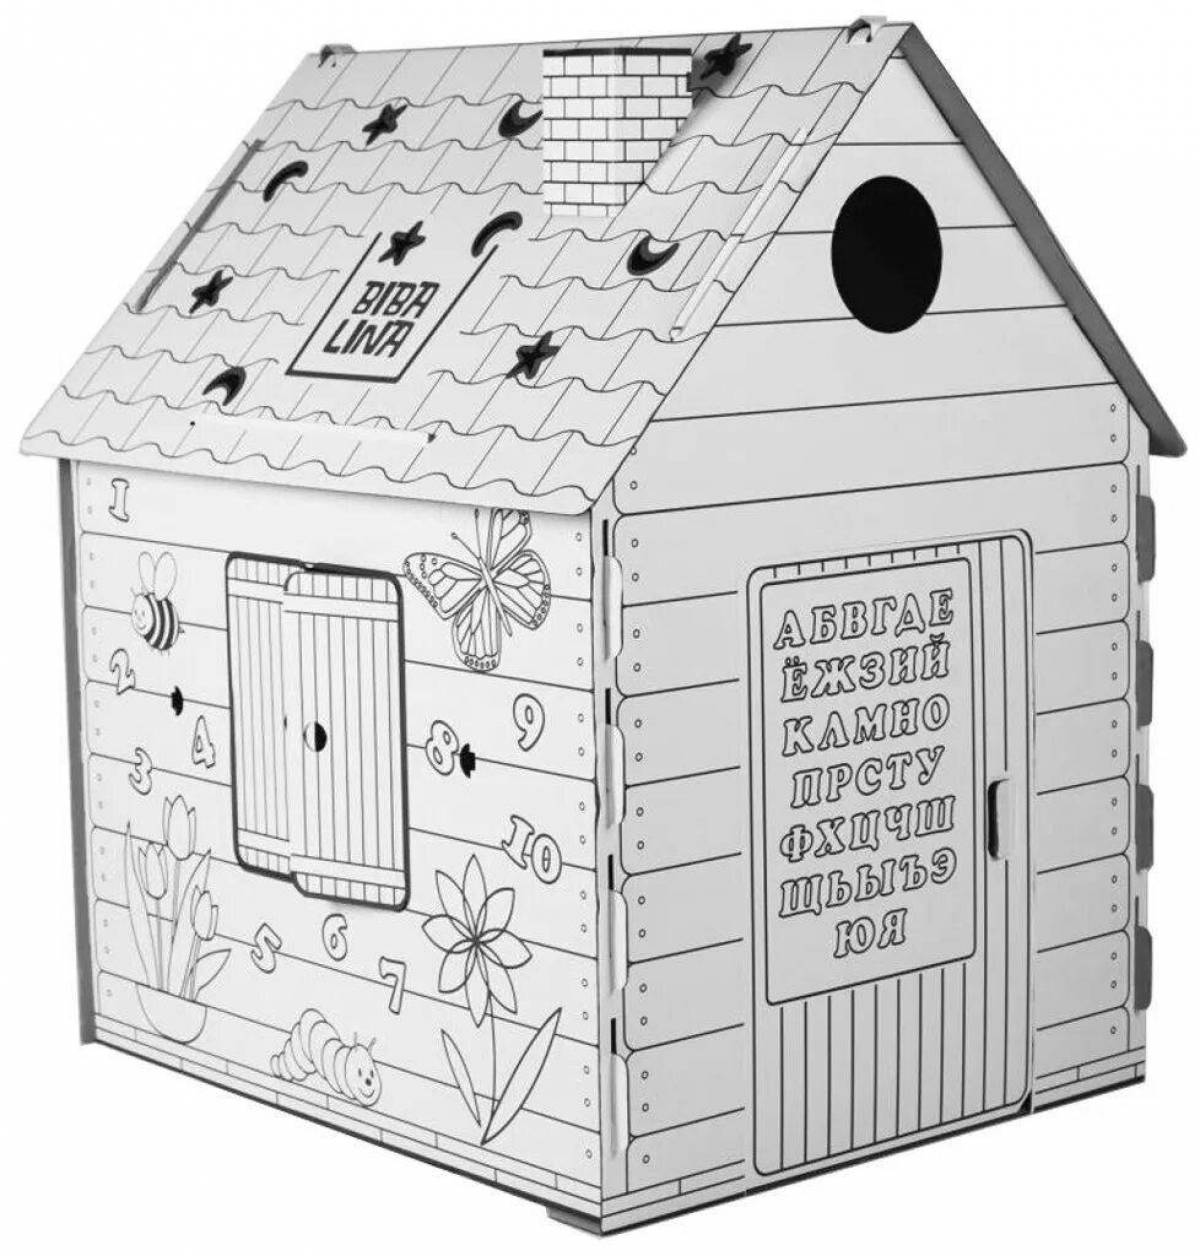 Fantastic cardboard house coloring book for kids